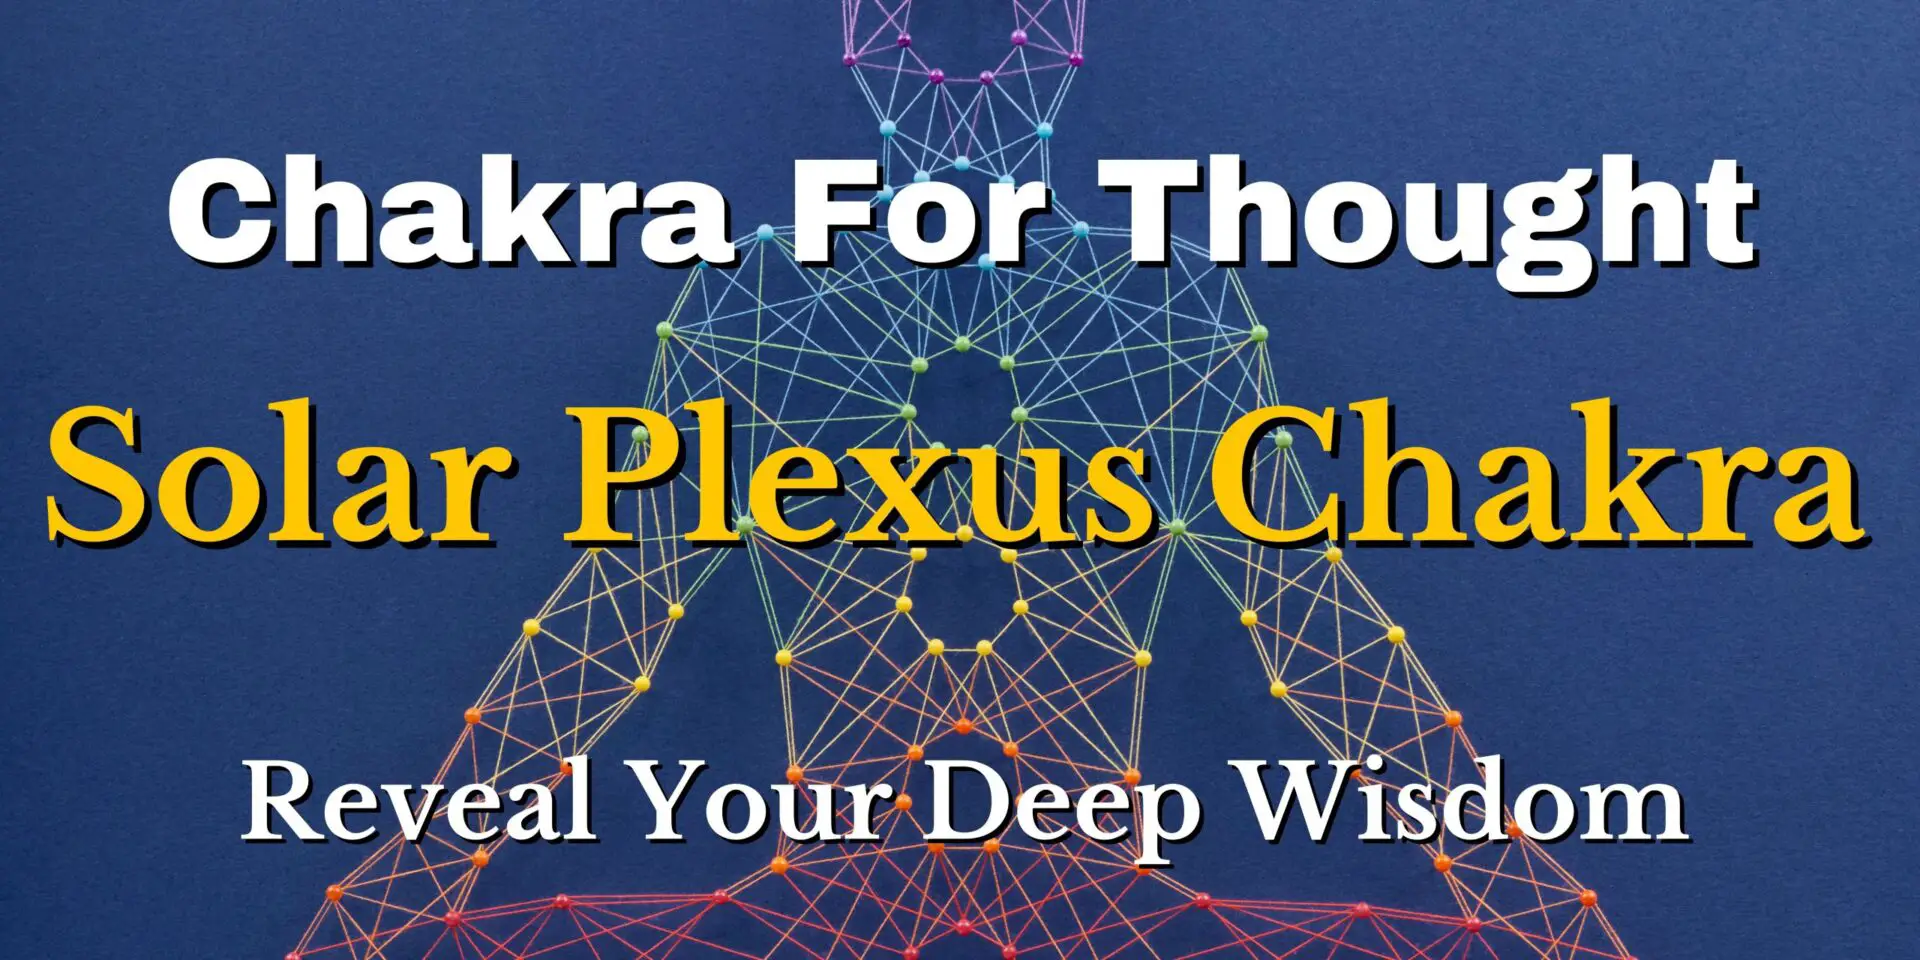 chakra for thought : solar plexus chakra - spiritual meanings